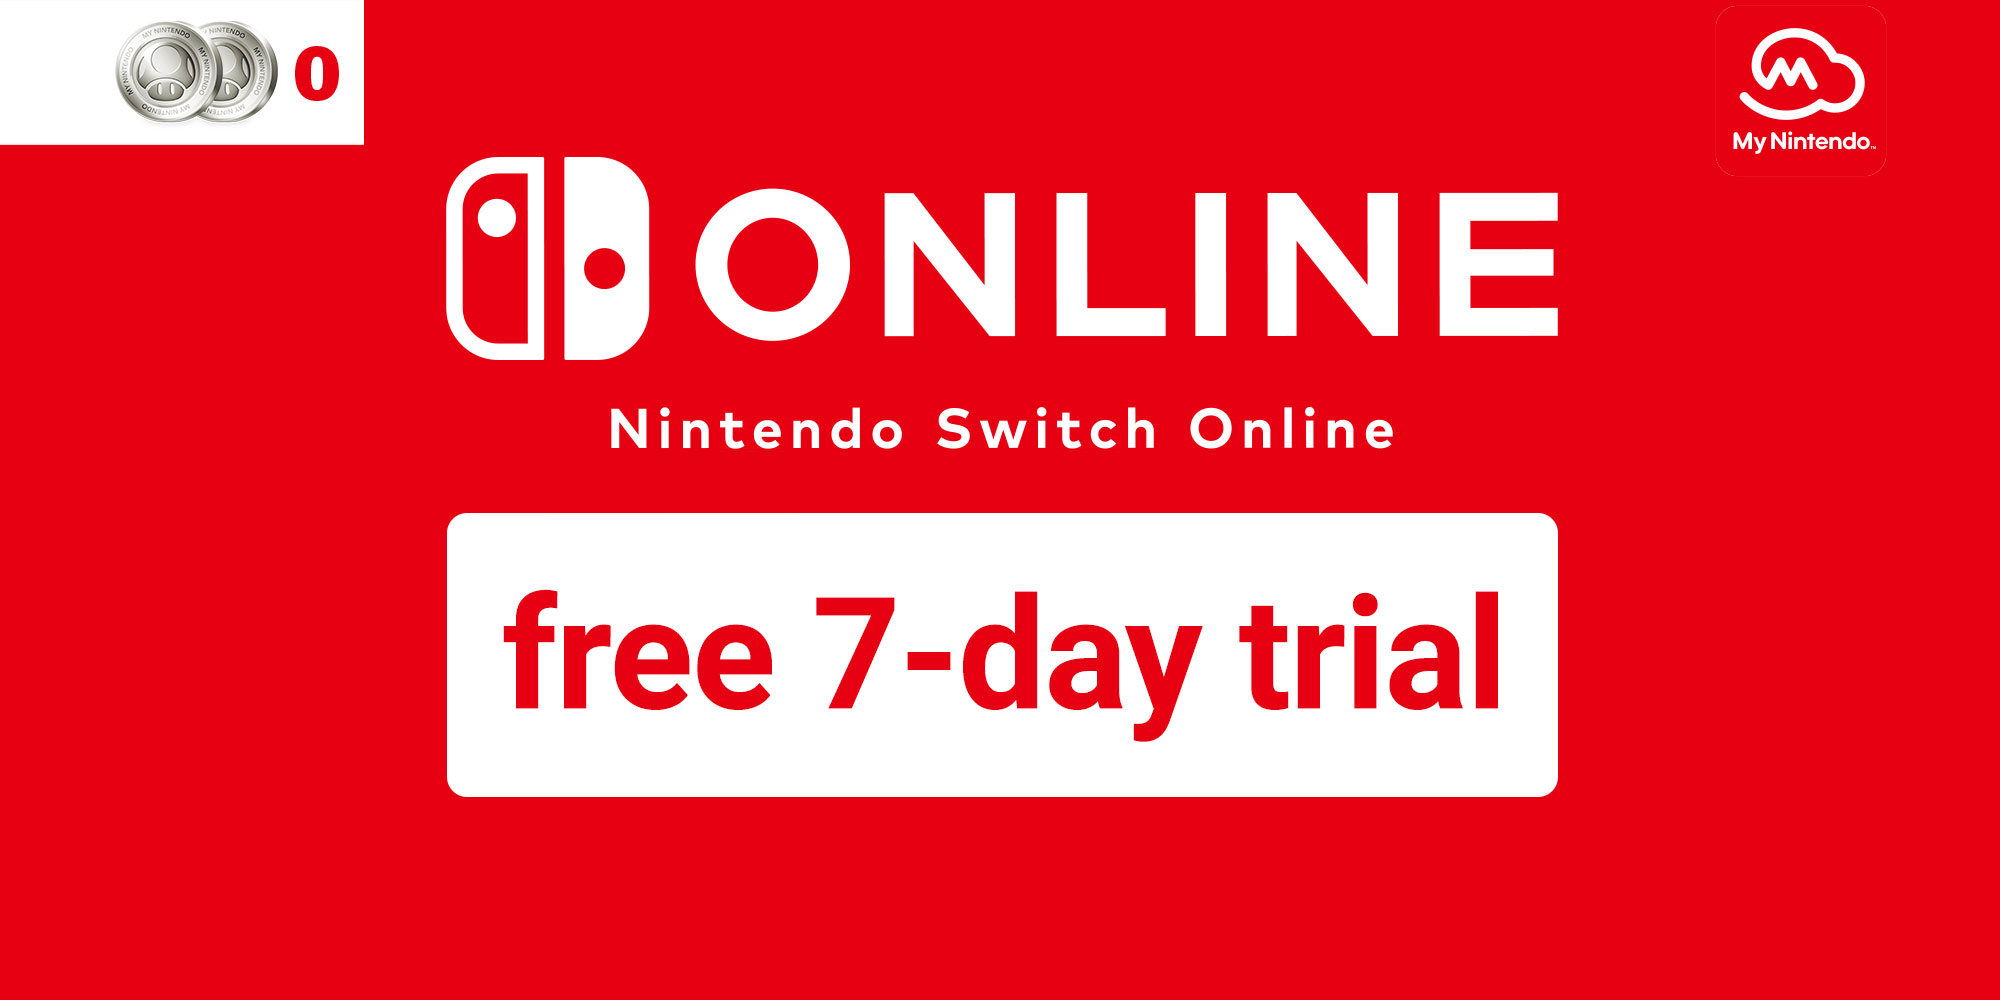 Nintendo Switch Online, Europe